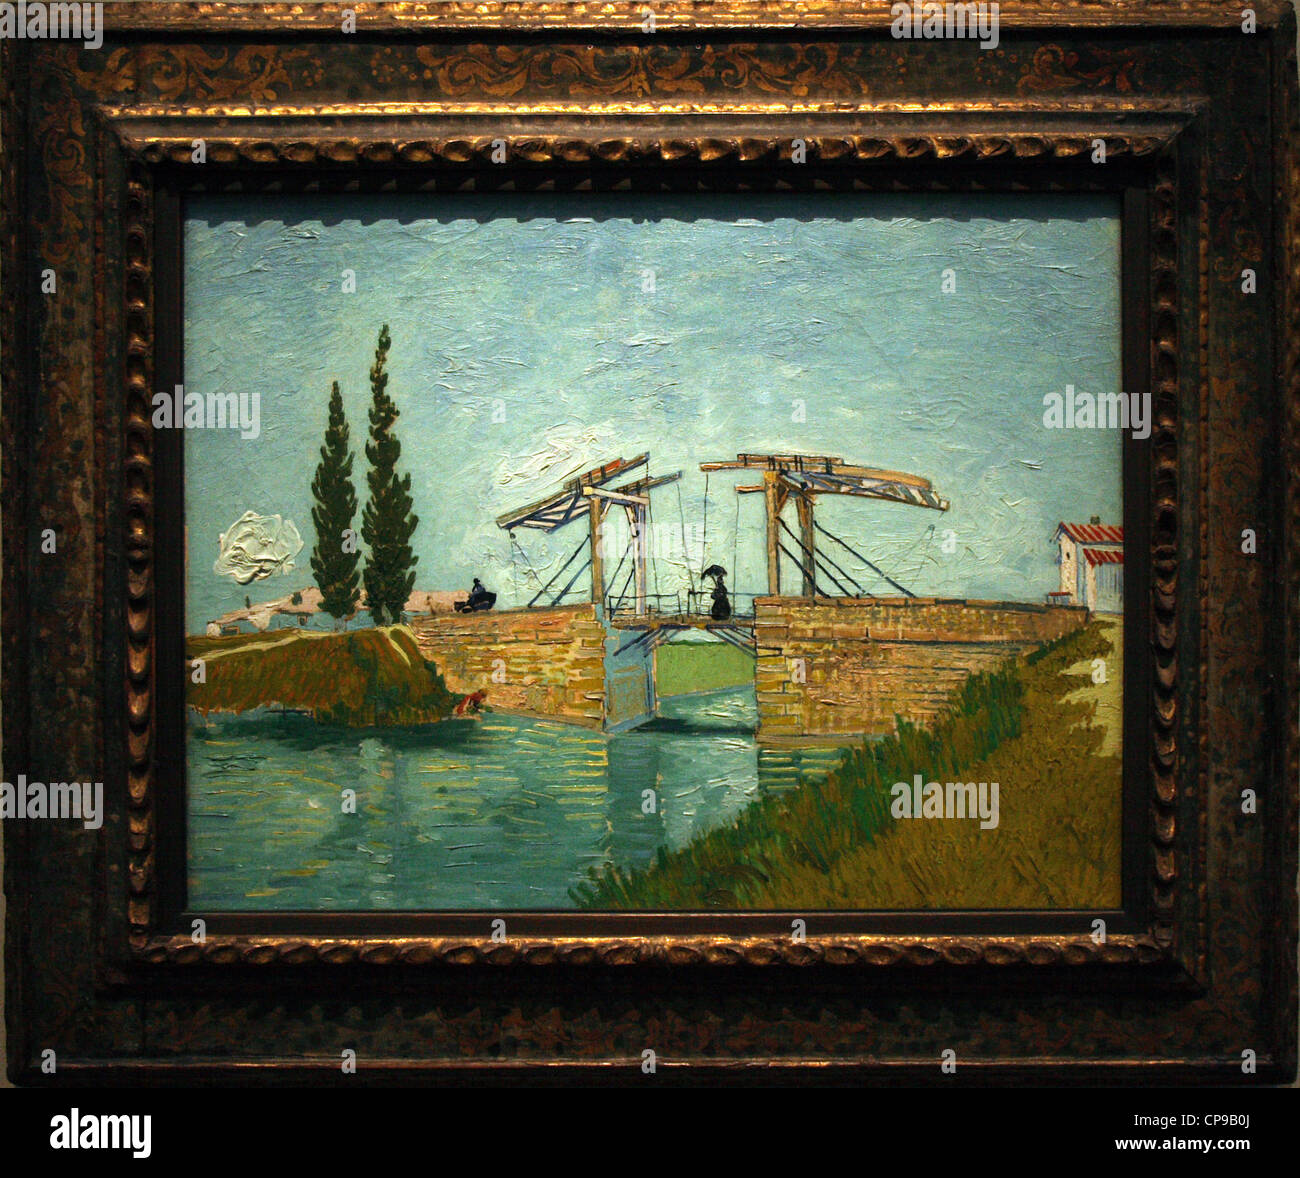 La pittura di Van Gogh nel Wallraf-Richartz Museum di Colonia Foto Stock